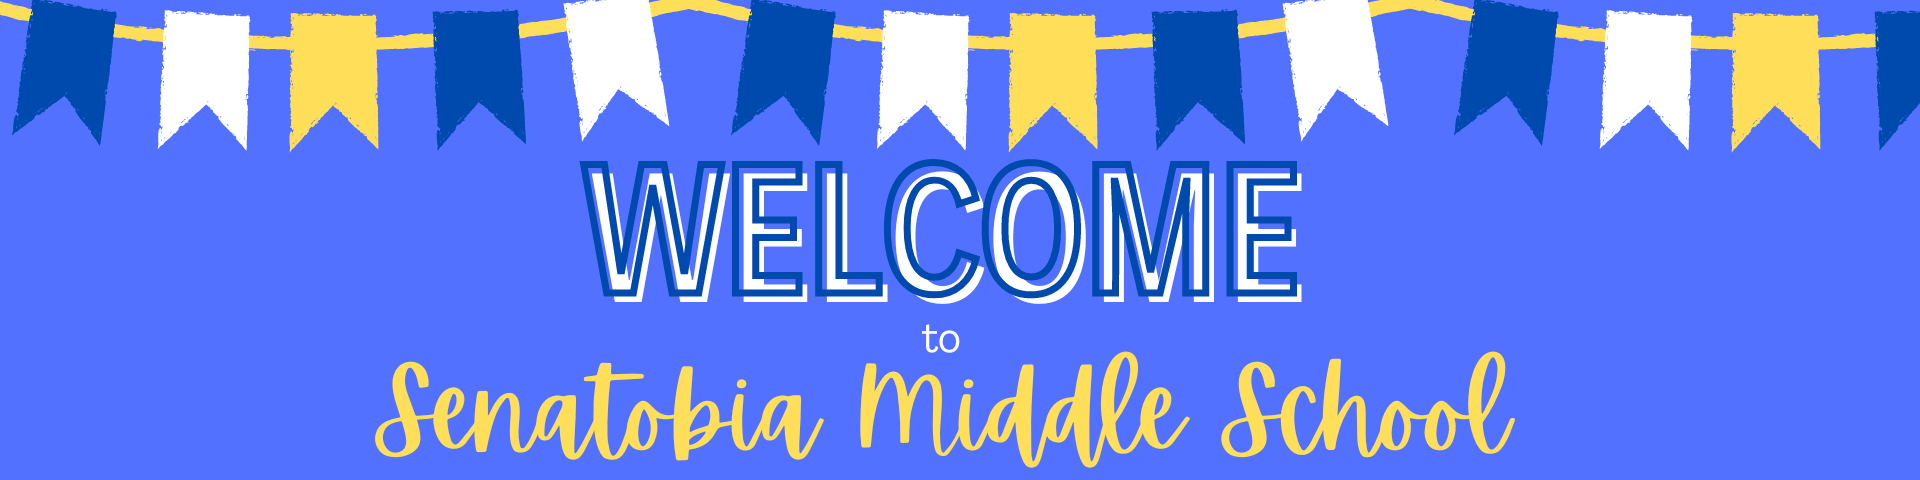 welcome to Senatobia Middle School